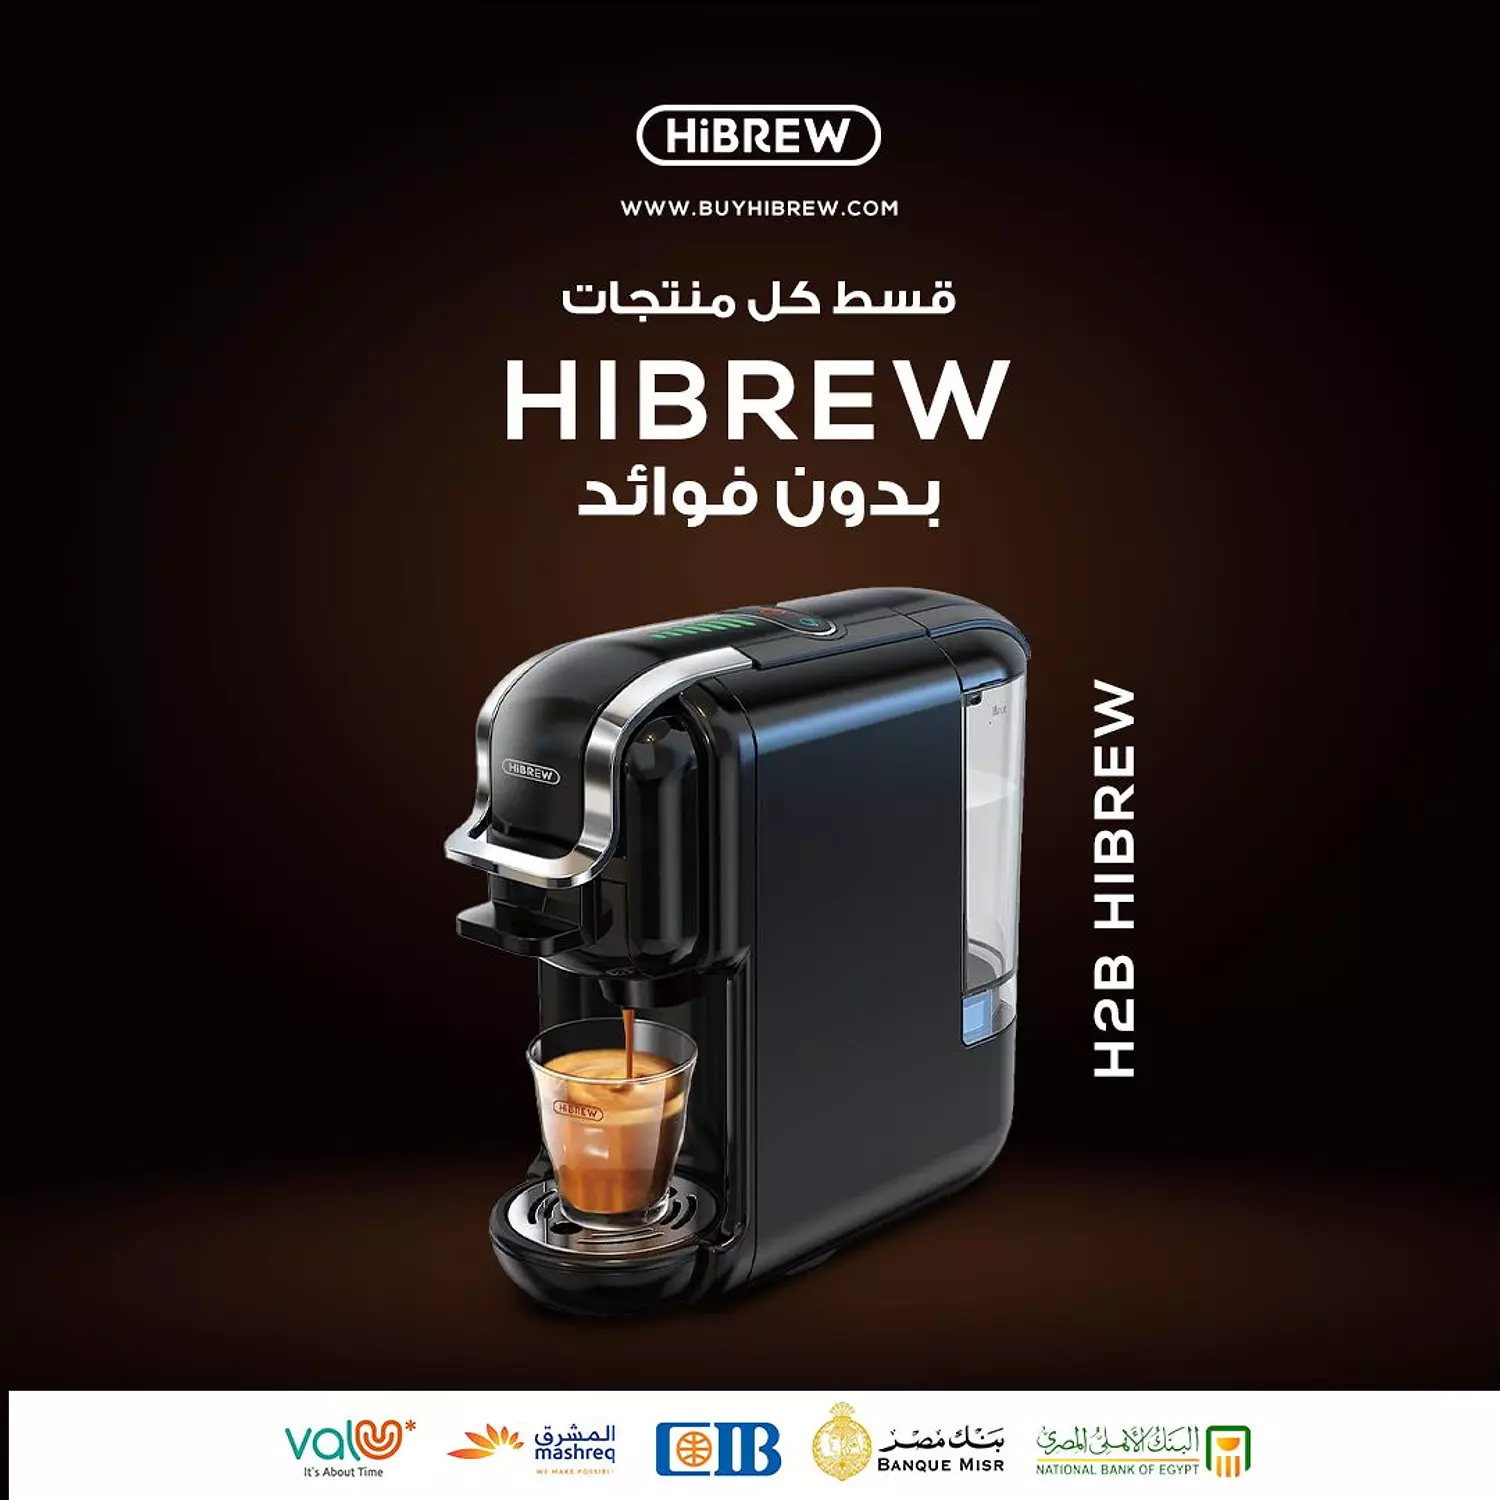 HiBREW coffee maker H2B